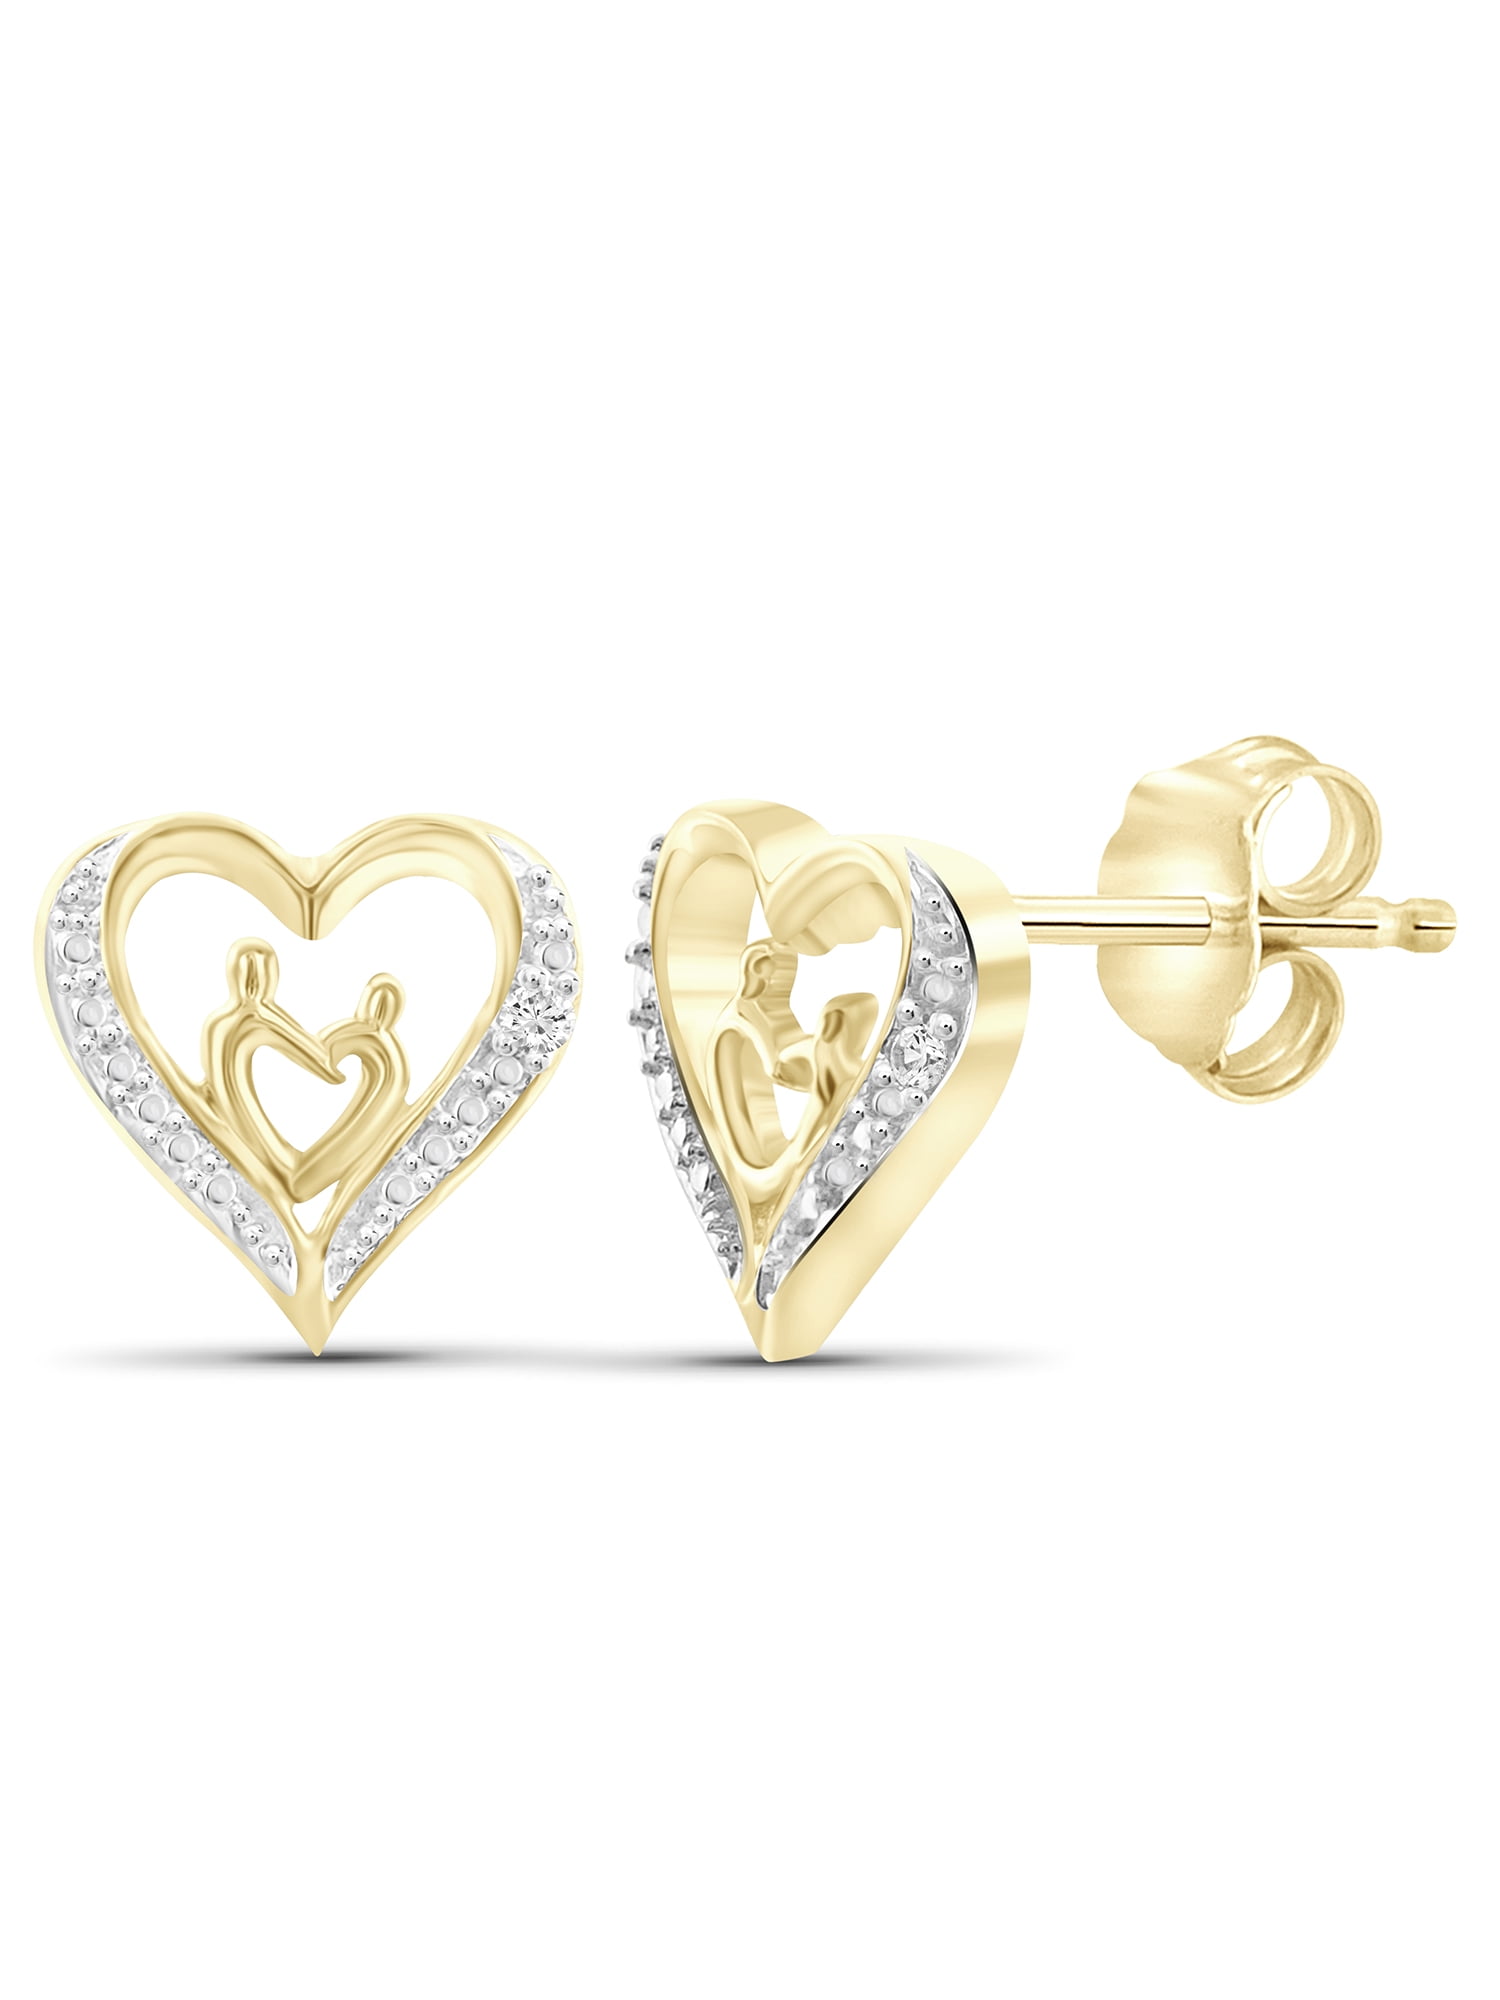 Gold heart stud earrings 9 carat rose gold cz 